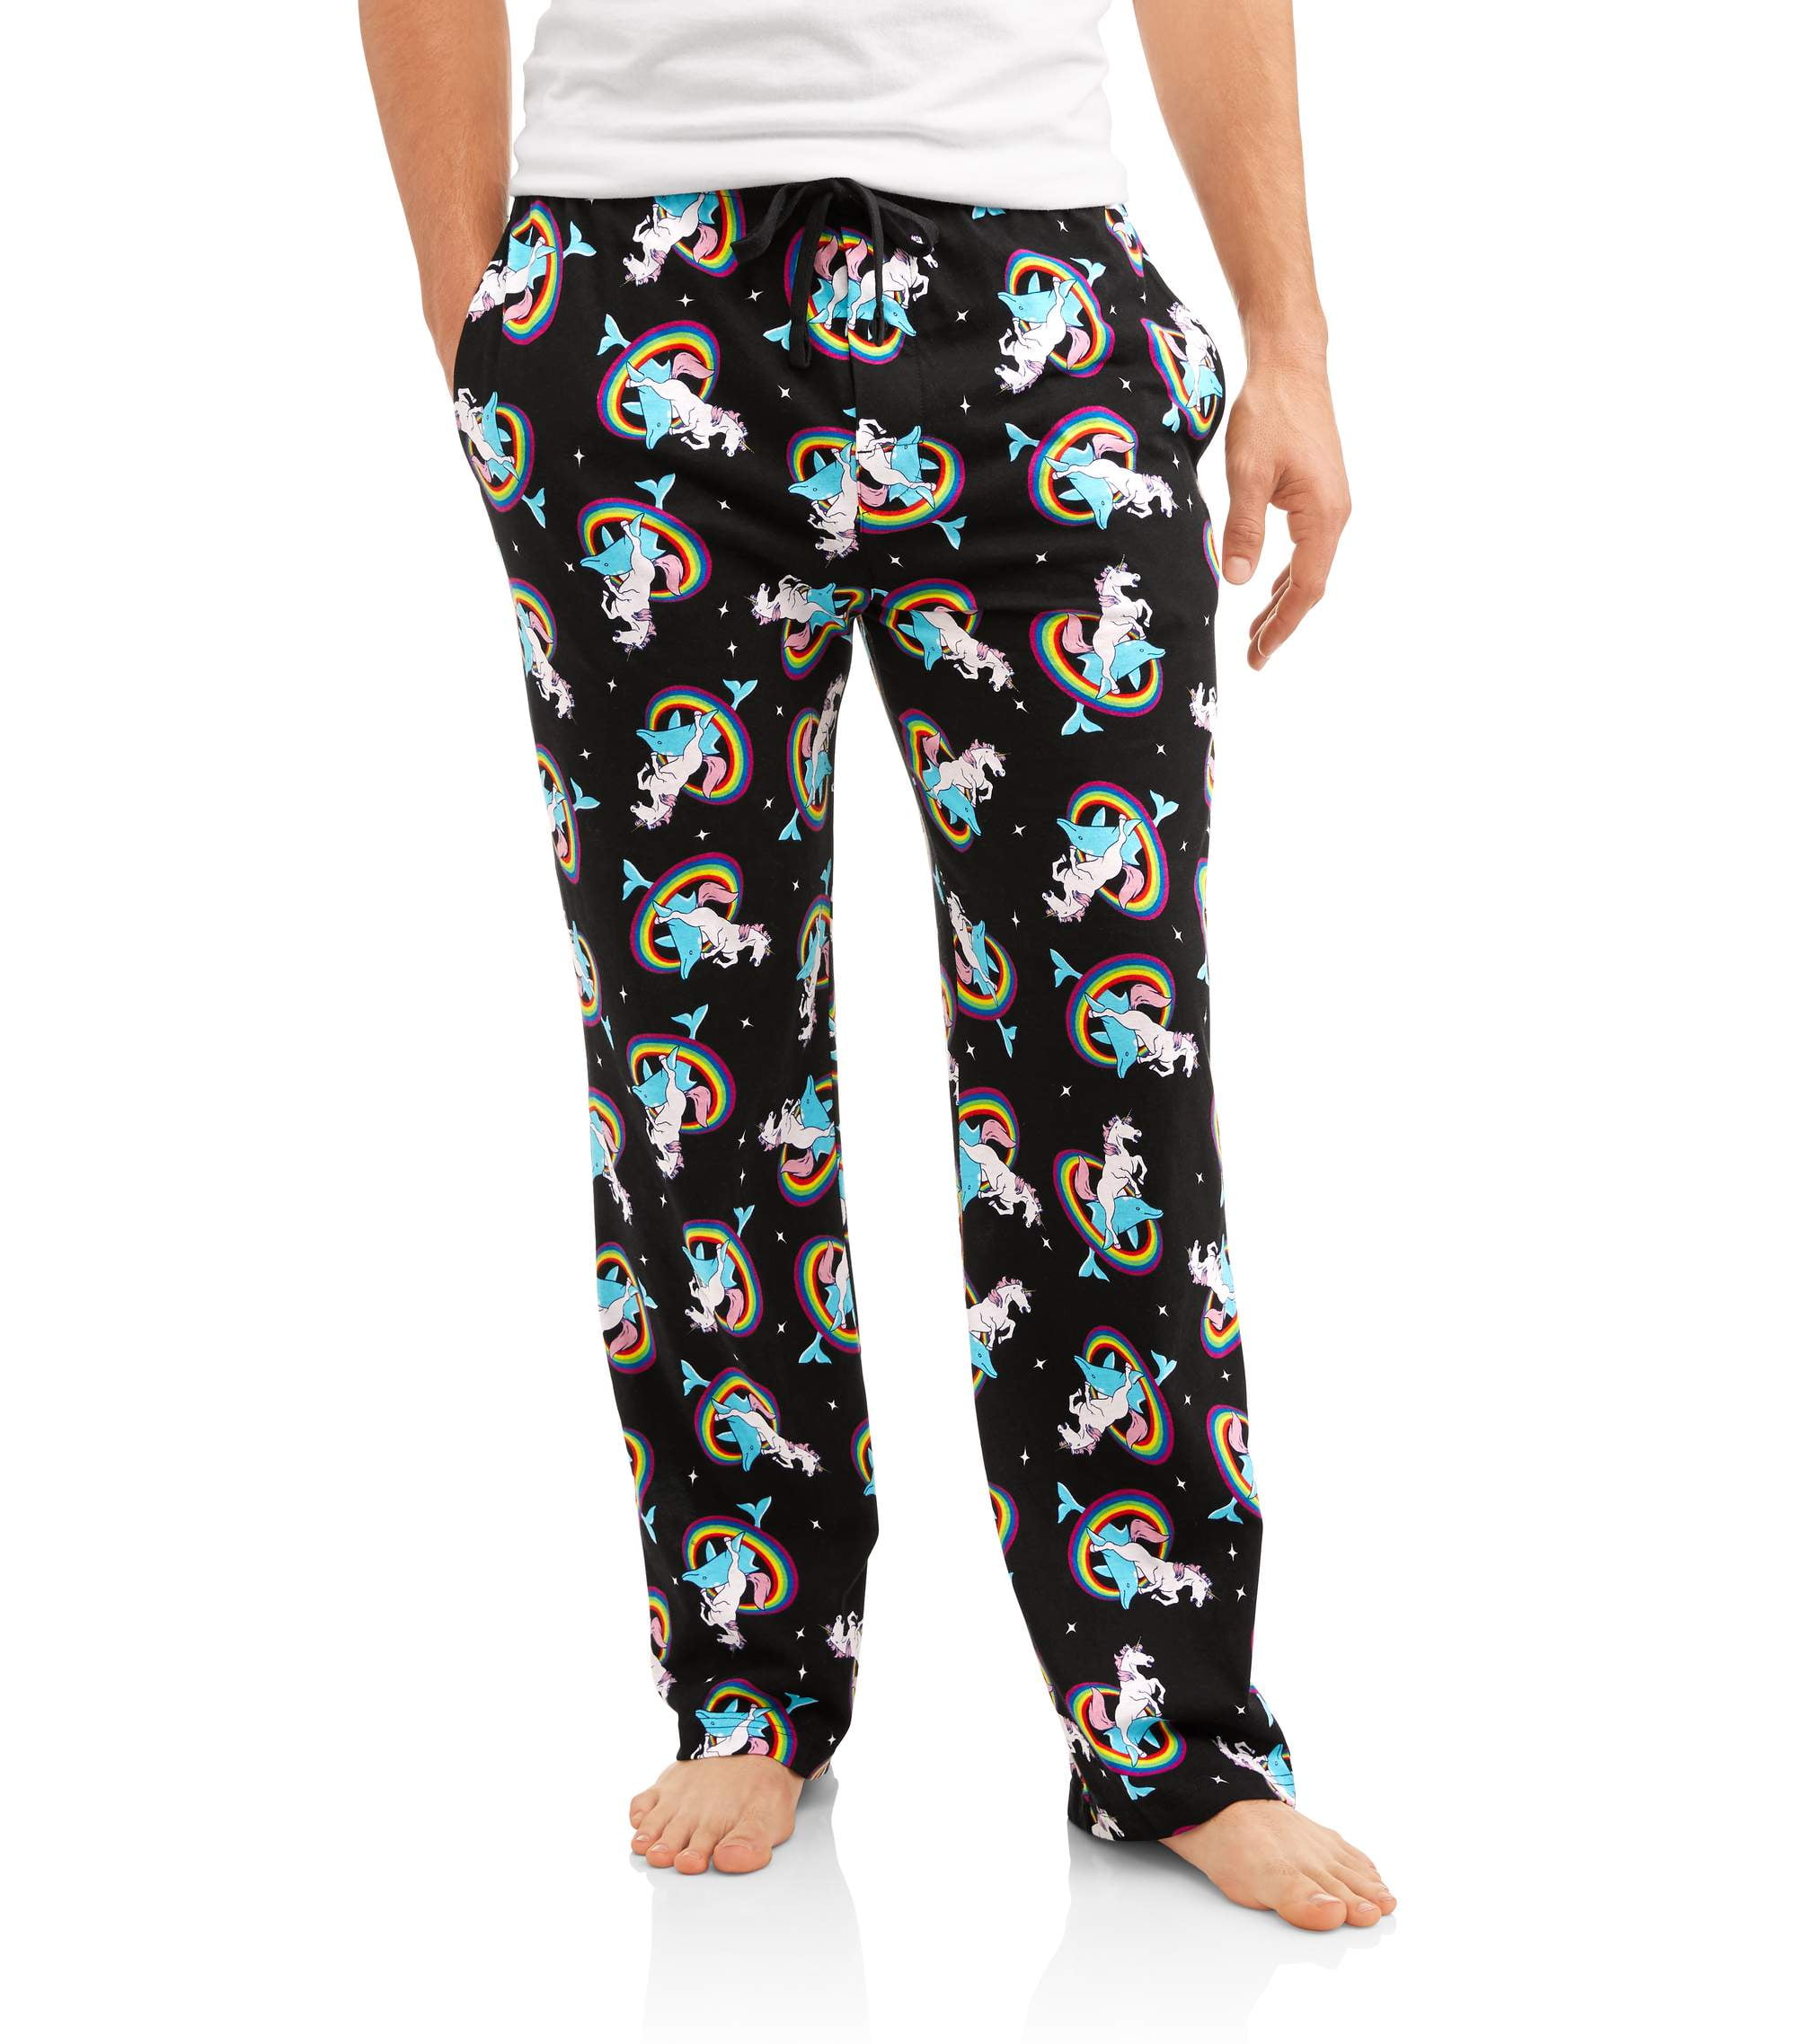 Comfy Sleep and Loungewear Rainbows and Unicorns Mens Cotton Jogger Pajama Pants 